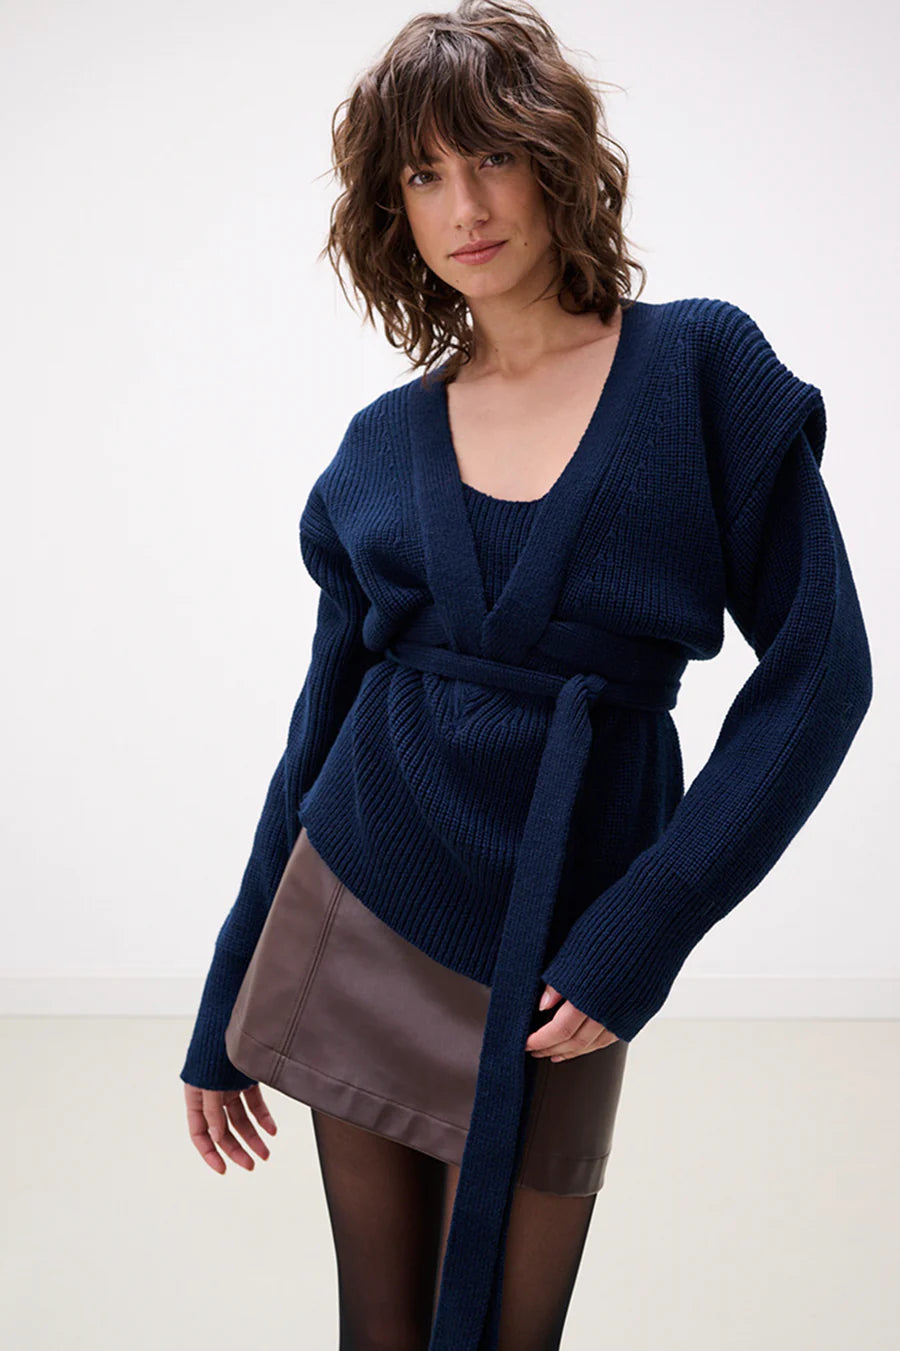 CHPTR-S Cloud Knit Sweater, v-neck sweater, wrap sweater, wool sweater, knit sweater, women's clothing